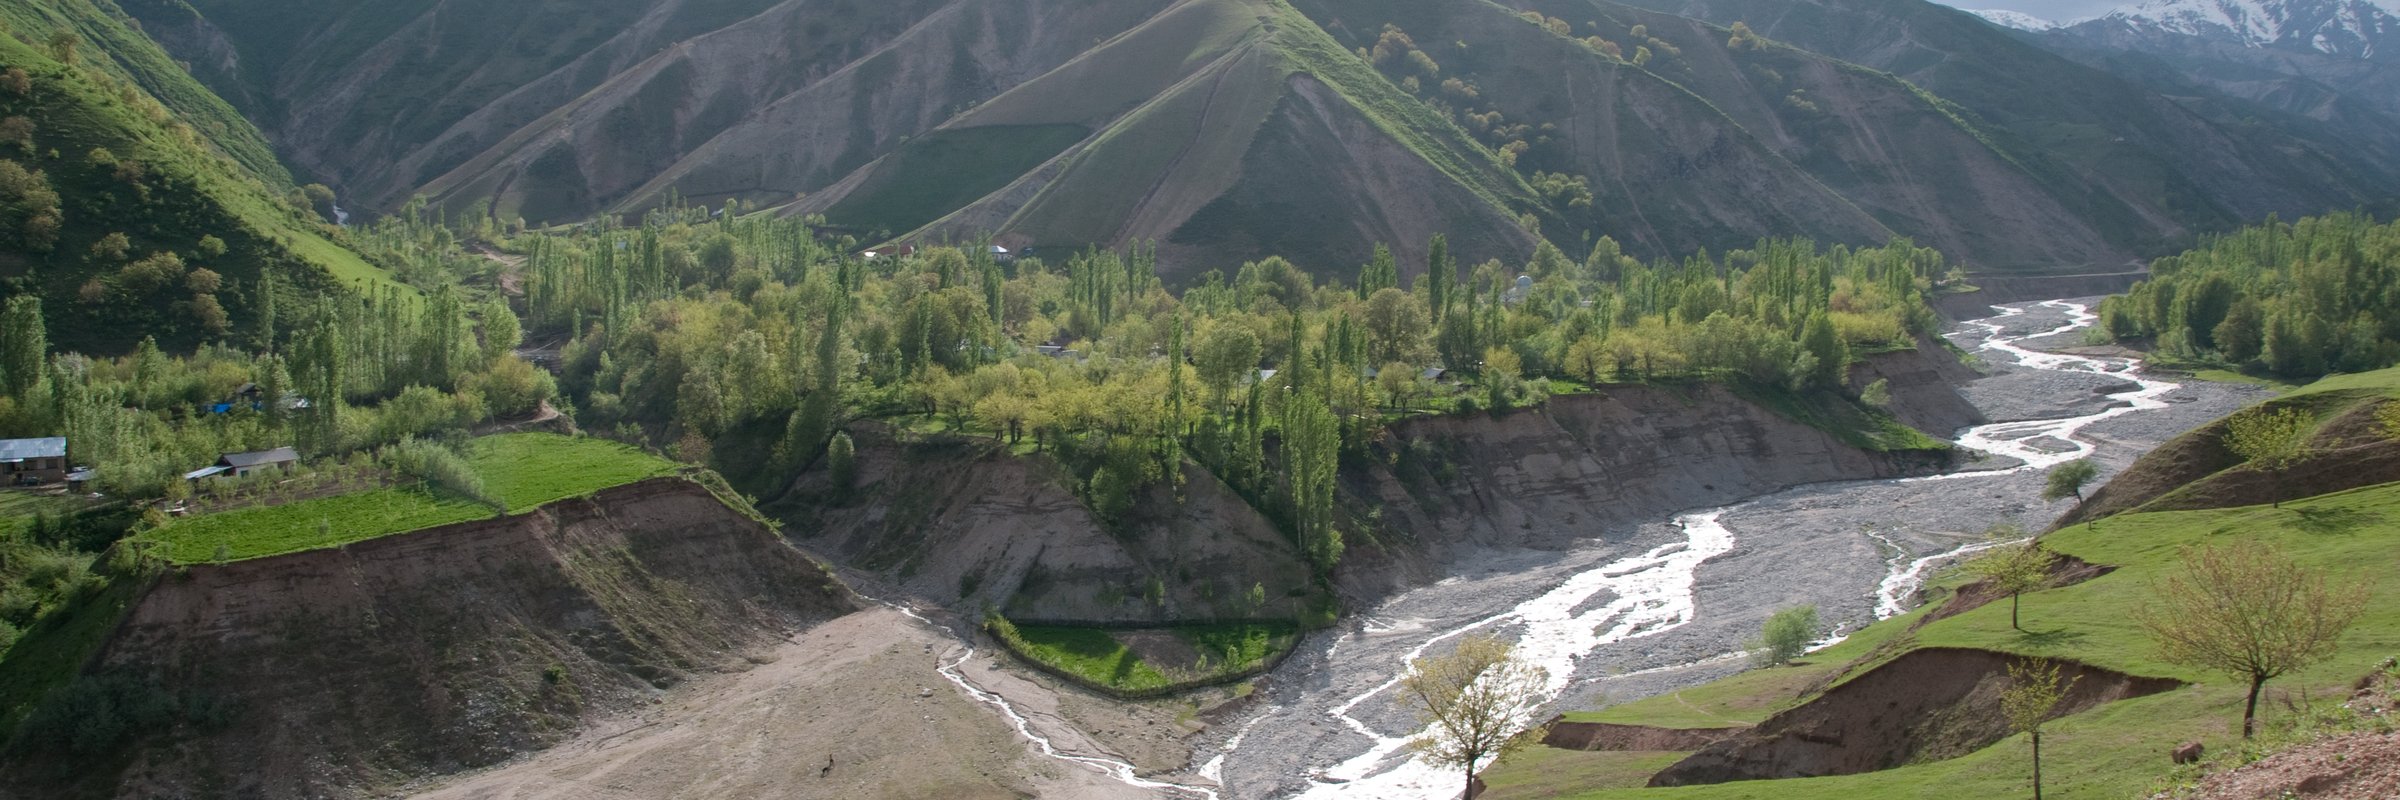 Tajikistan Dry Mountains